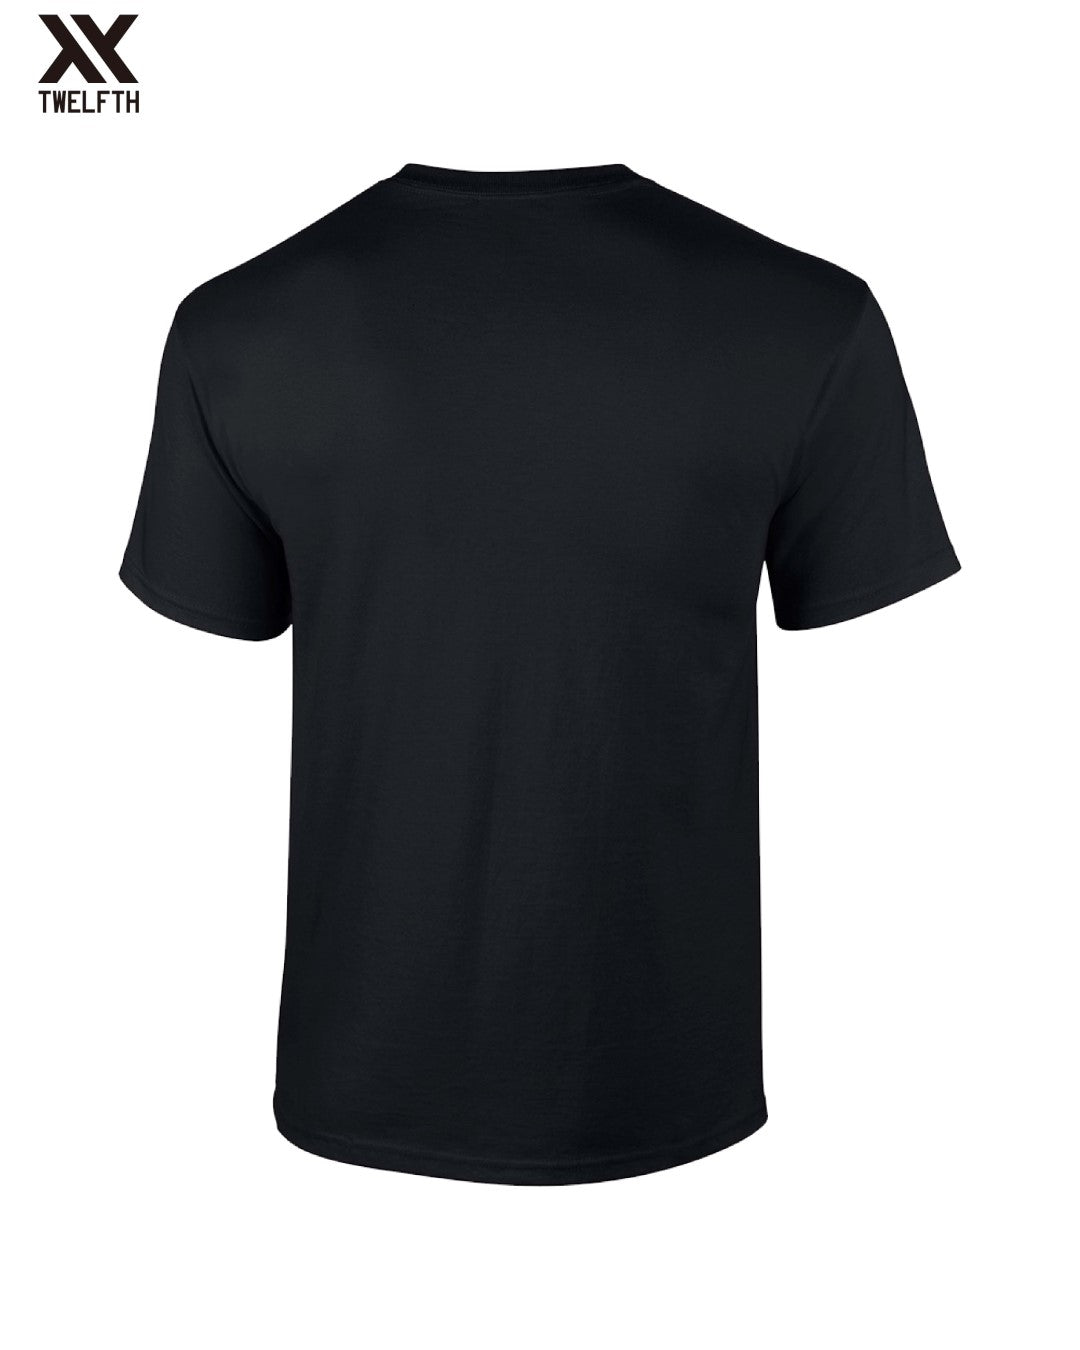 Juventus Crest T-Shirt - Mens